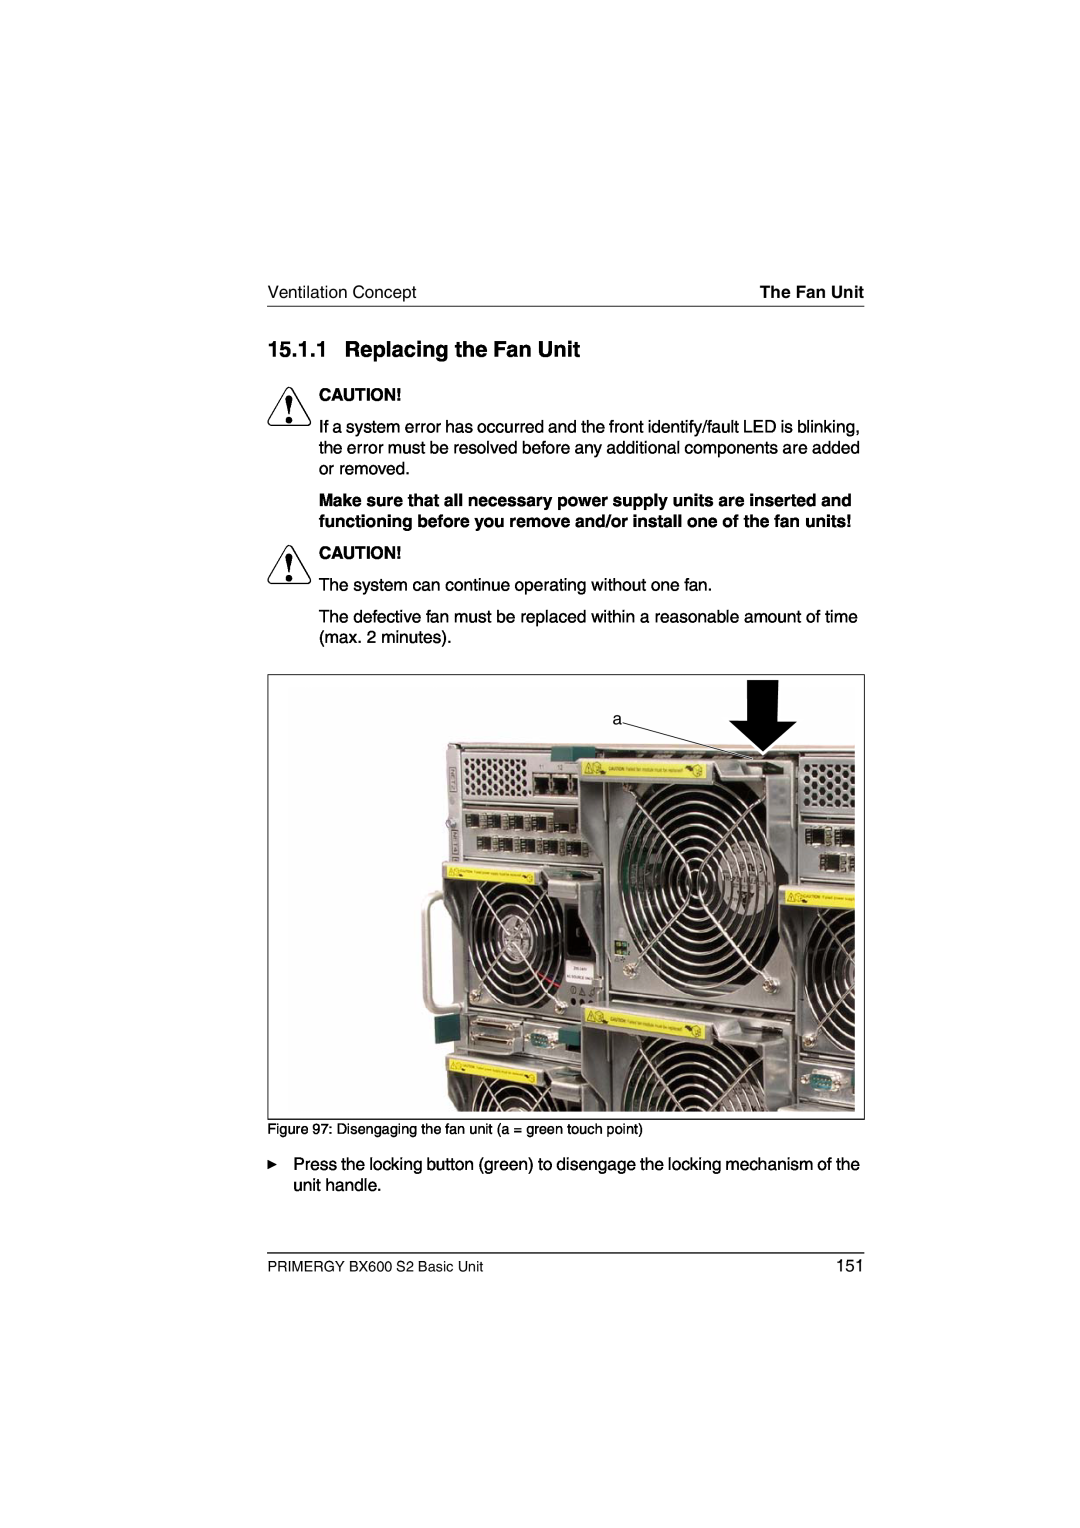 Fujitsu BX600 S2 manual Replacing the Fan Unit, Ventilation Concept, V Caution 